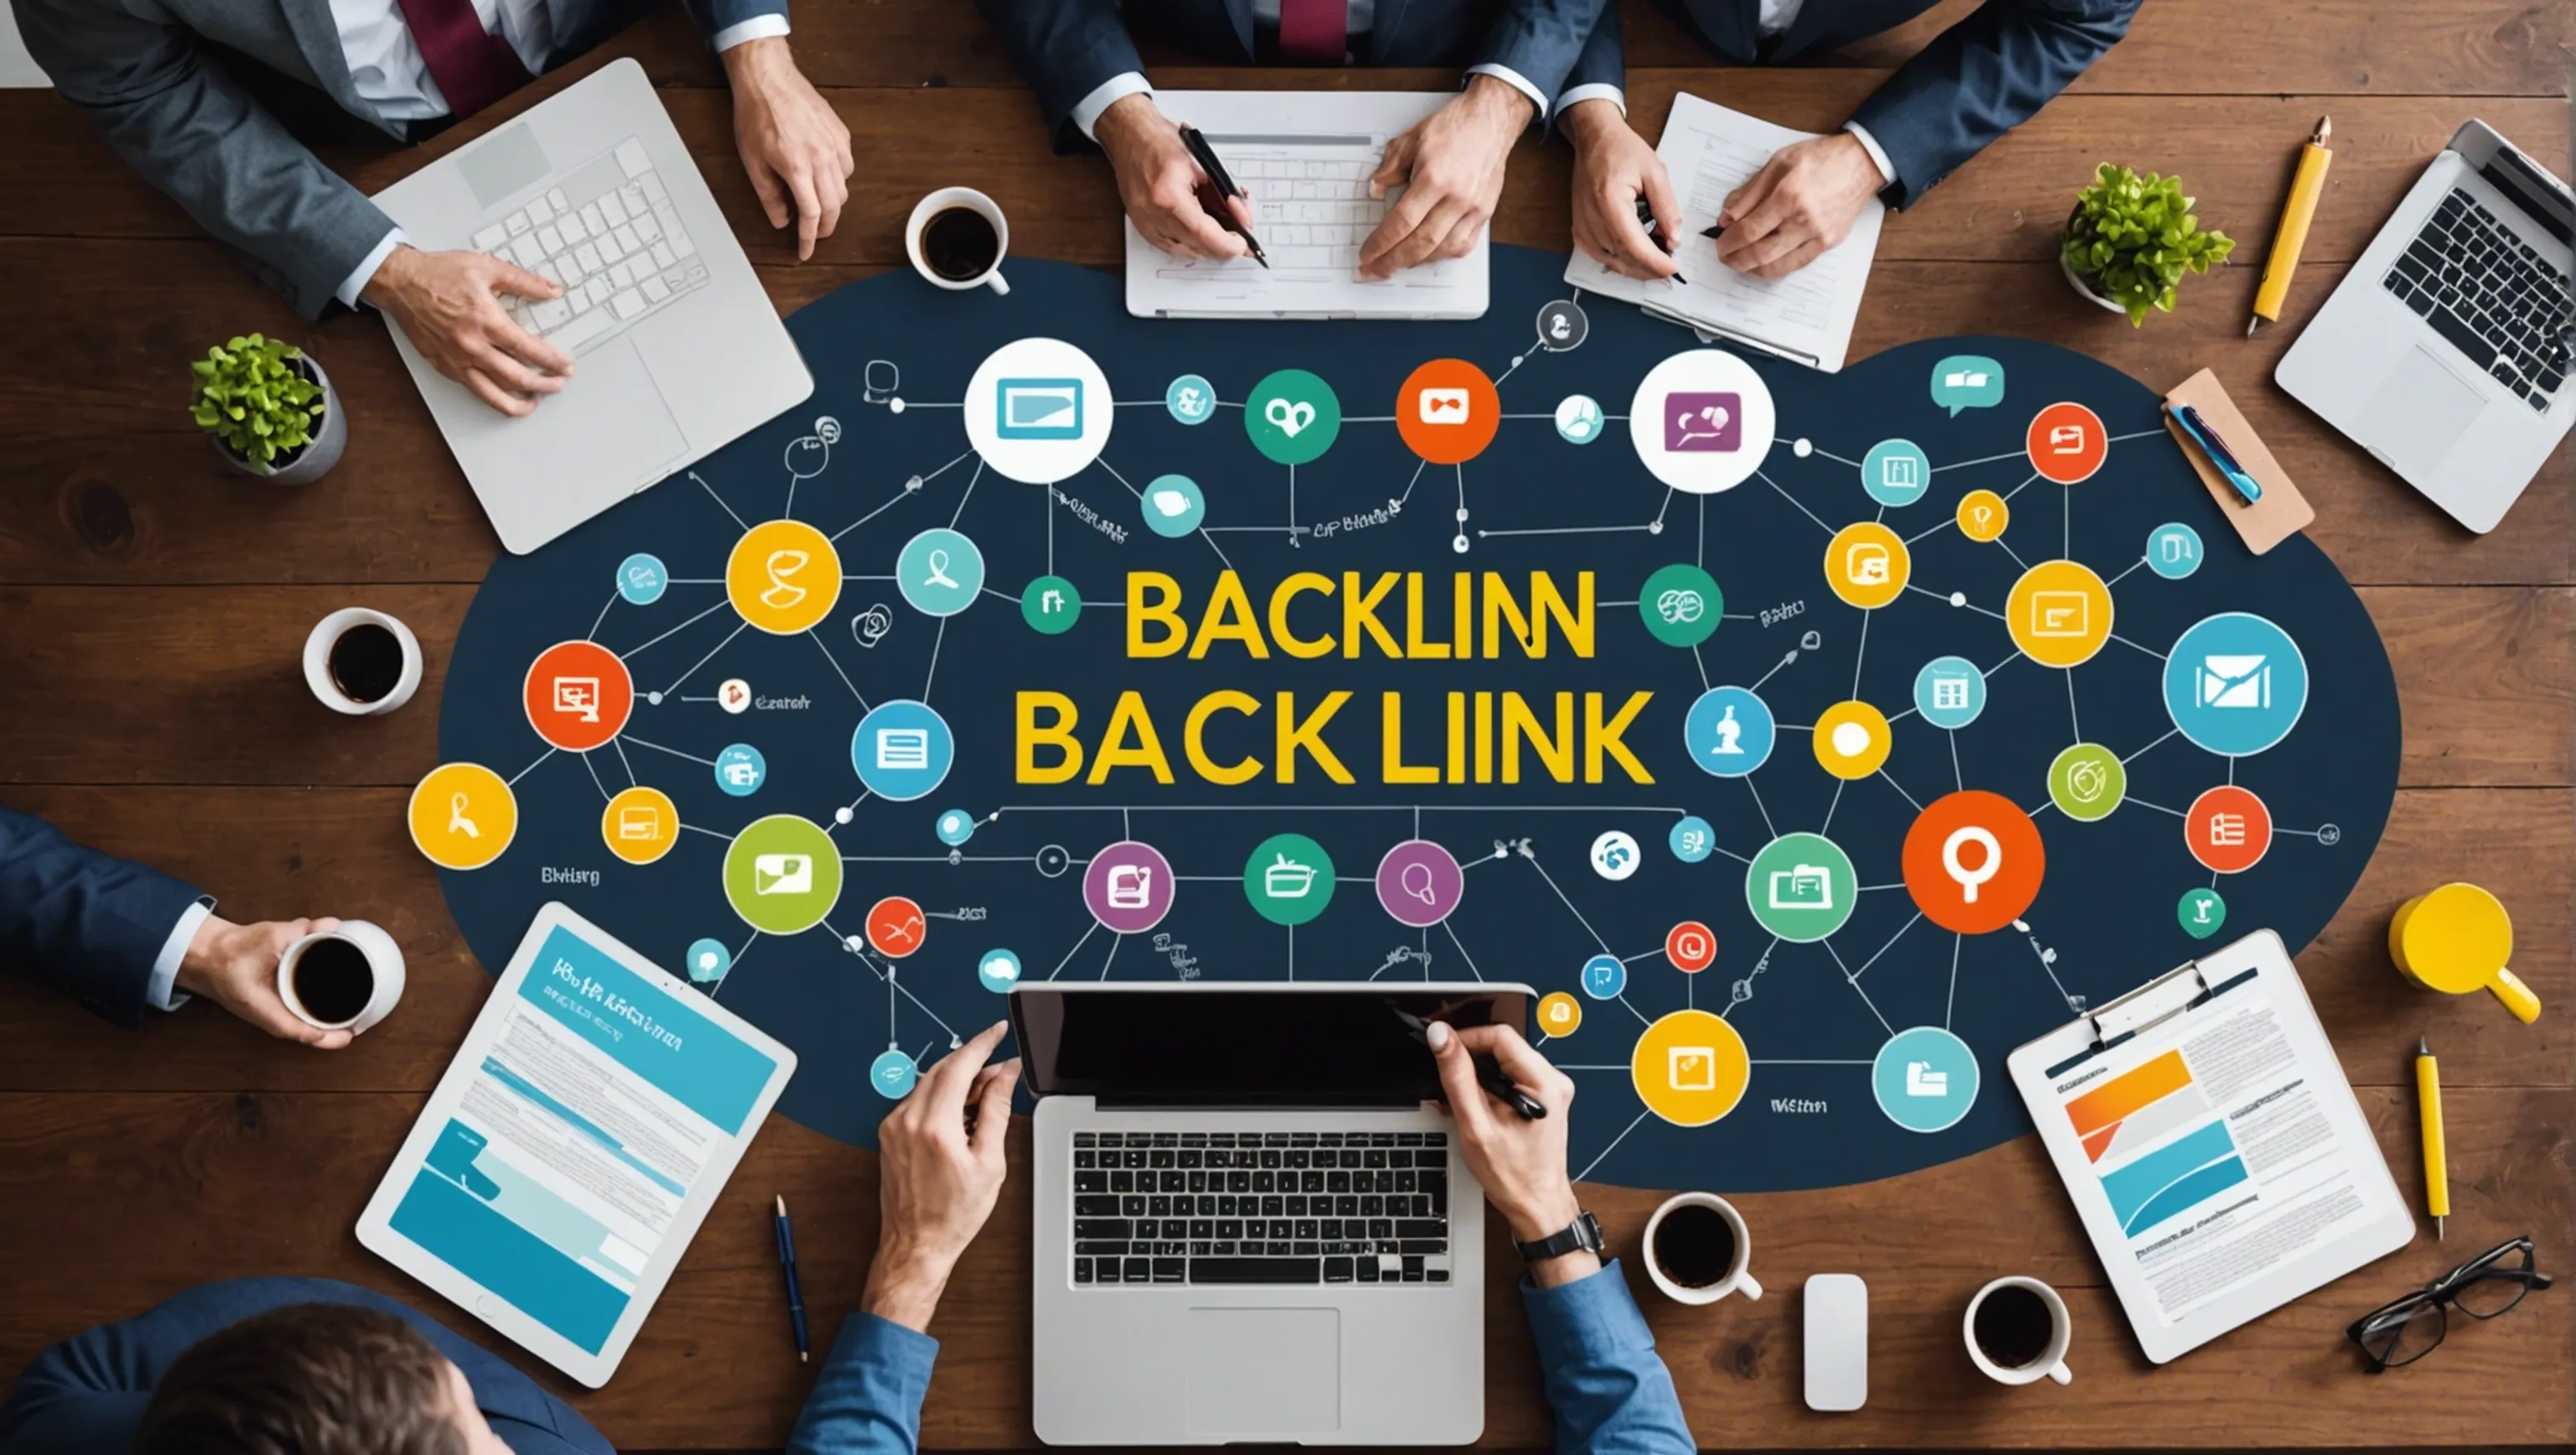 Identifying Relevant Websites for Backlink Opportunities